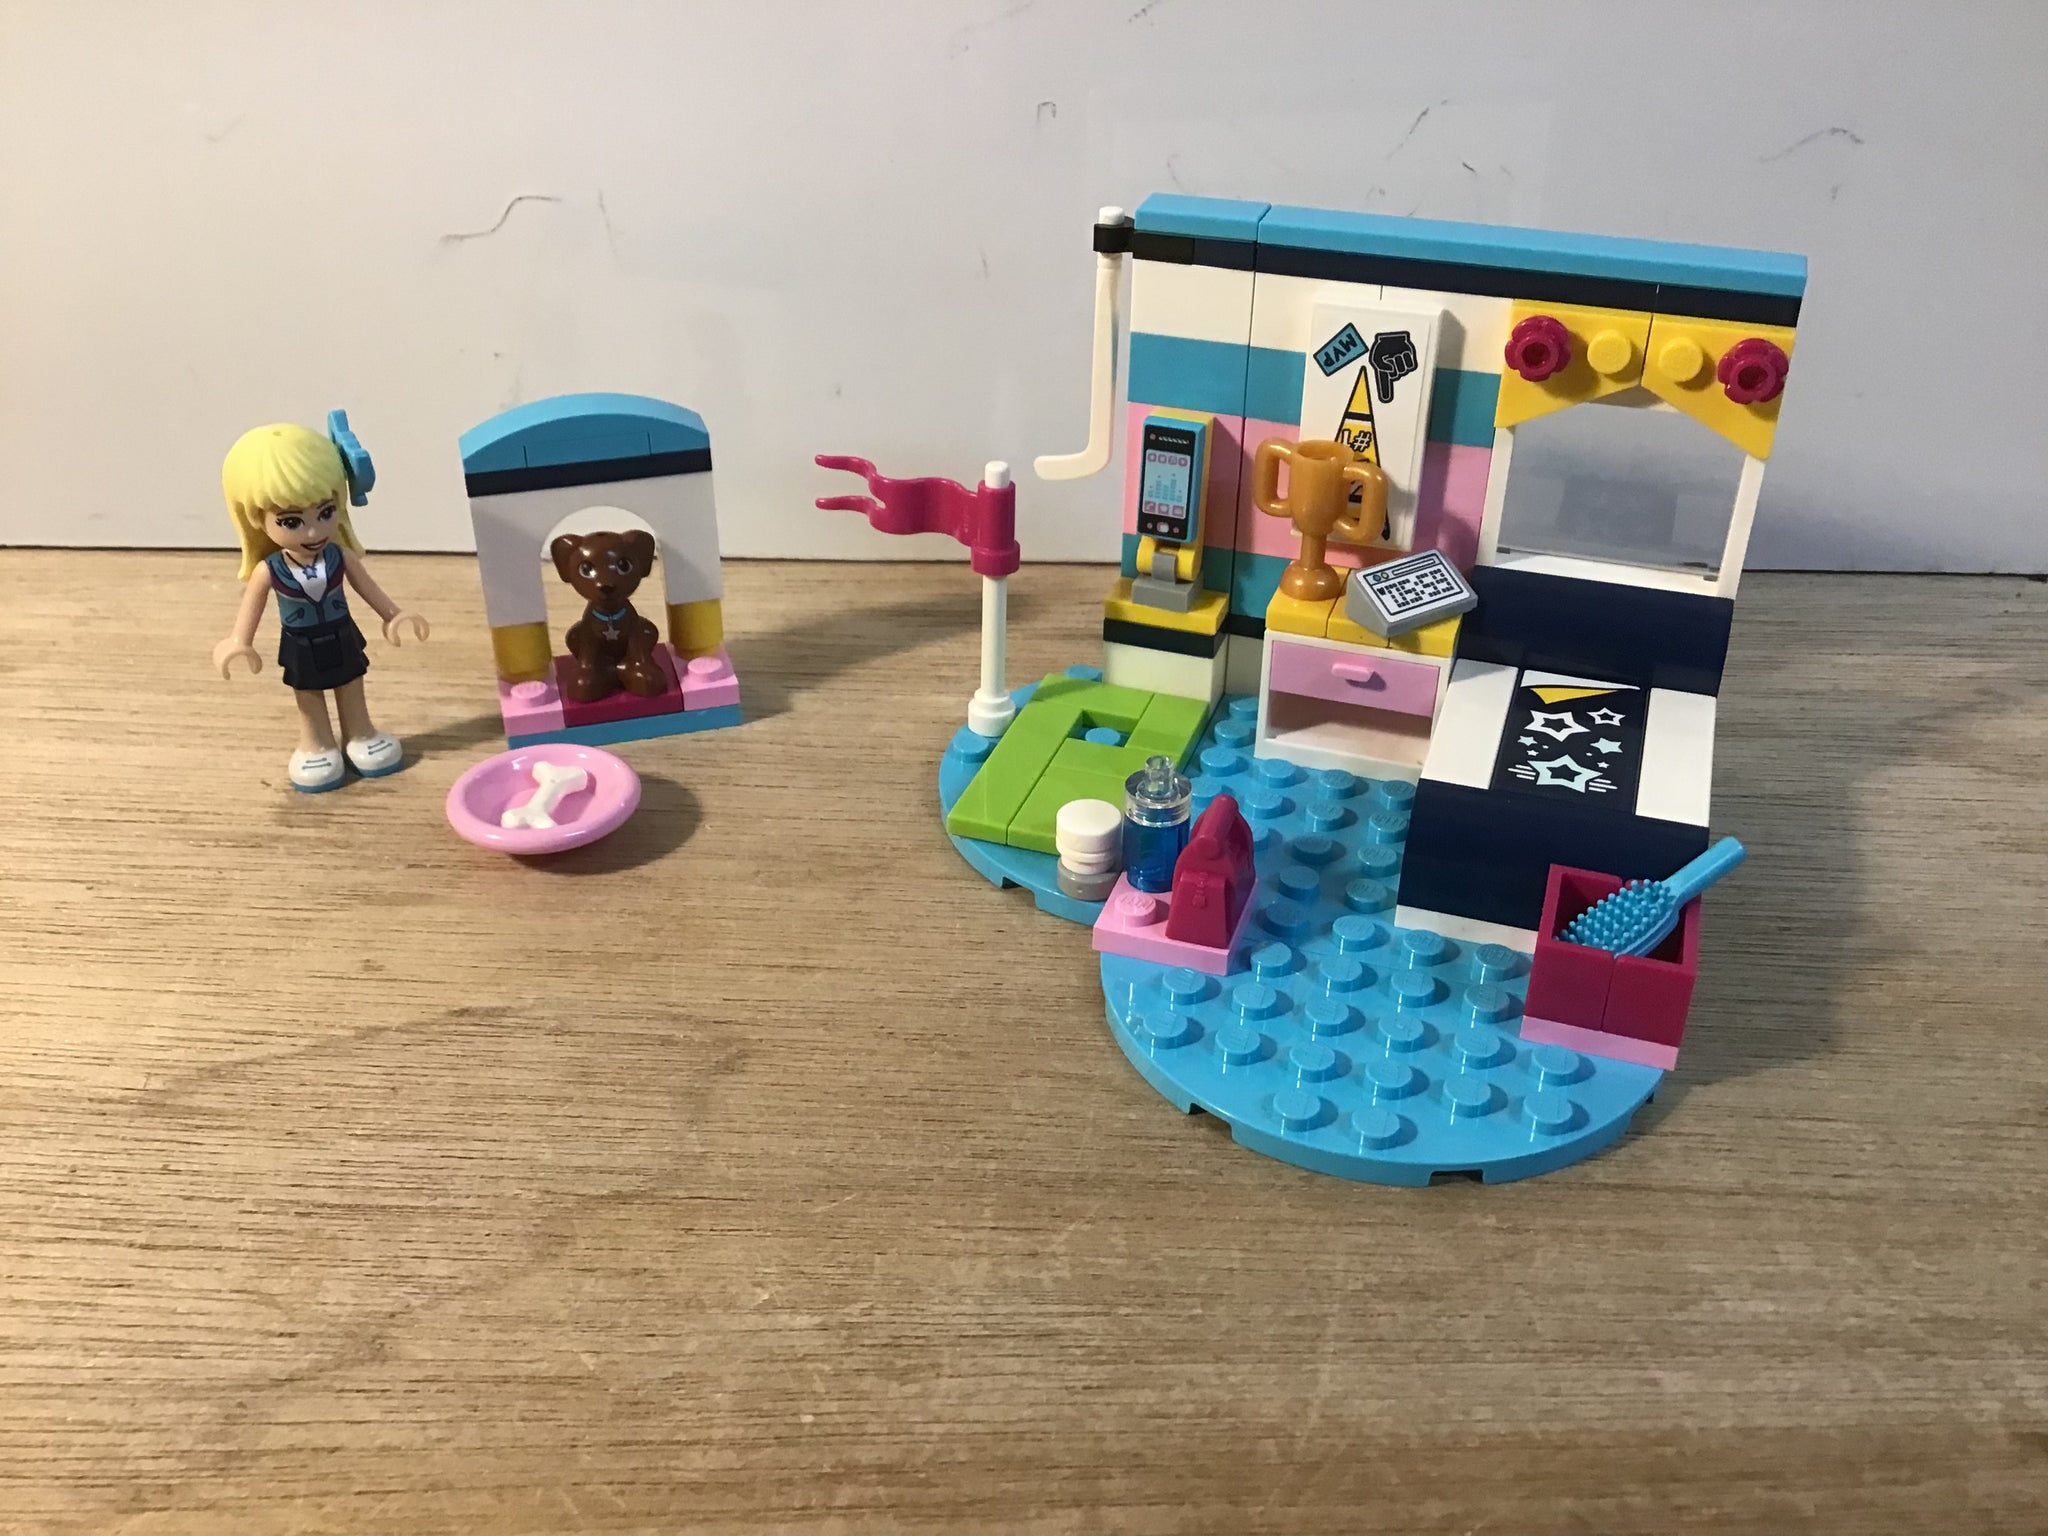 LEGO Stephanie's Bedroom Set 41328